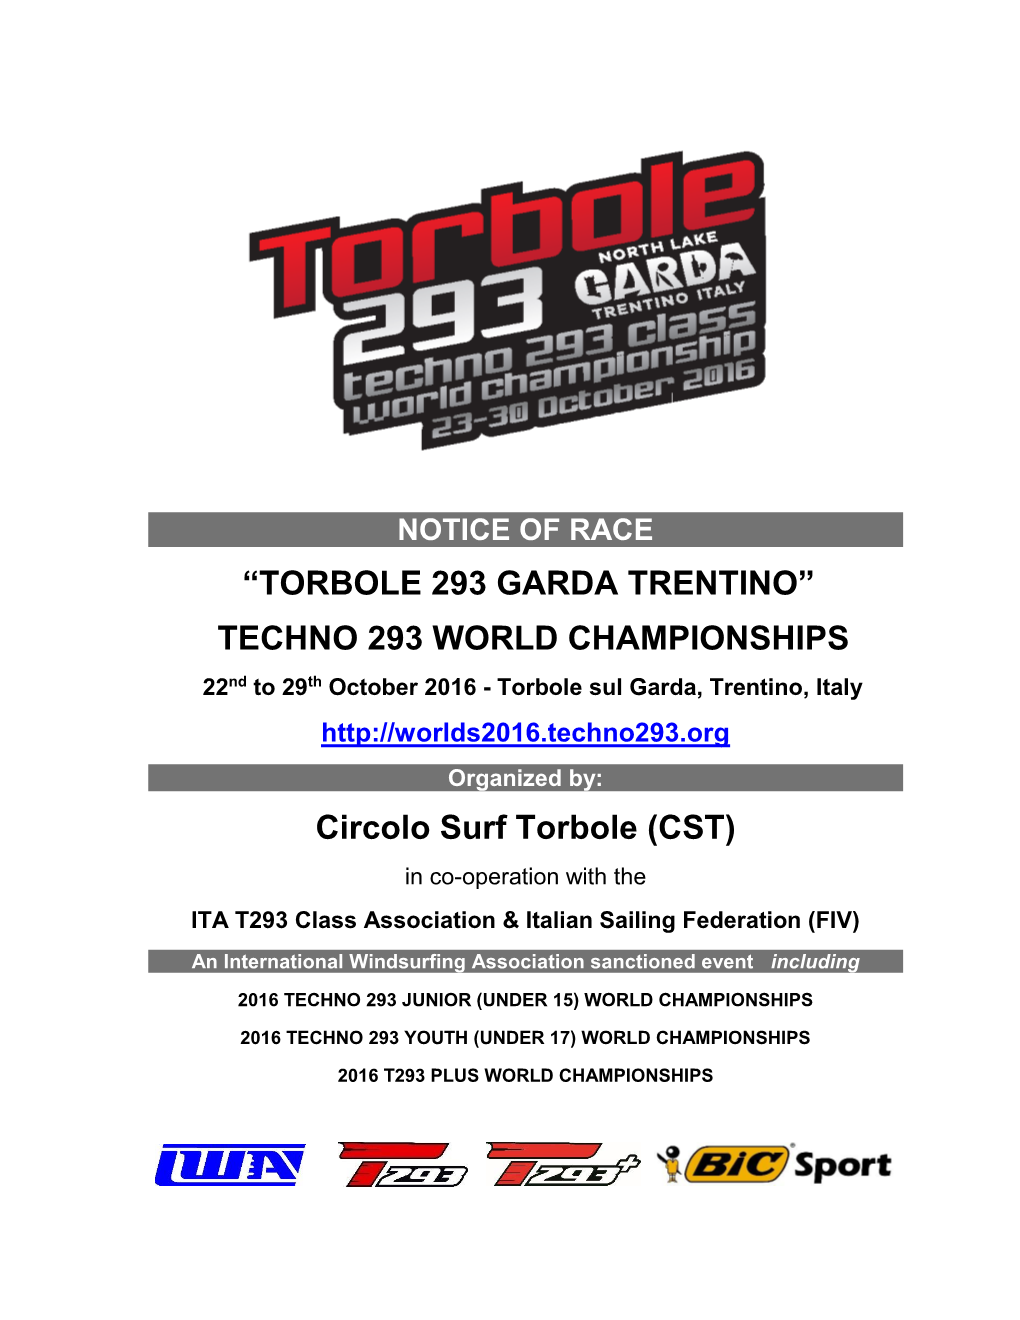 TECHNO 293 WORLD CHAMPIONSHIPS 22Nd to 29Th October 2016 - Torbole Sul Garda, Trentino, Italy Organized By